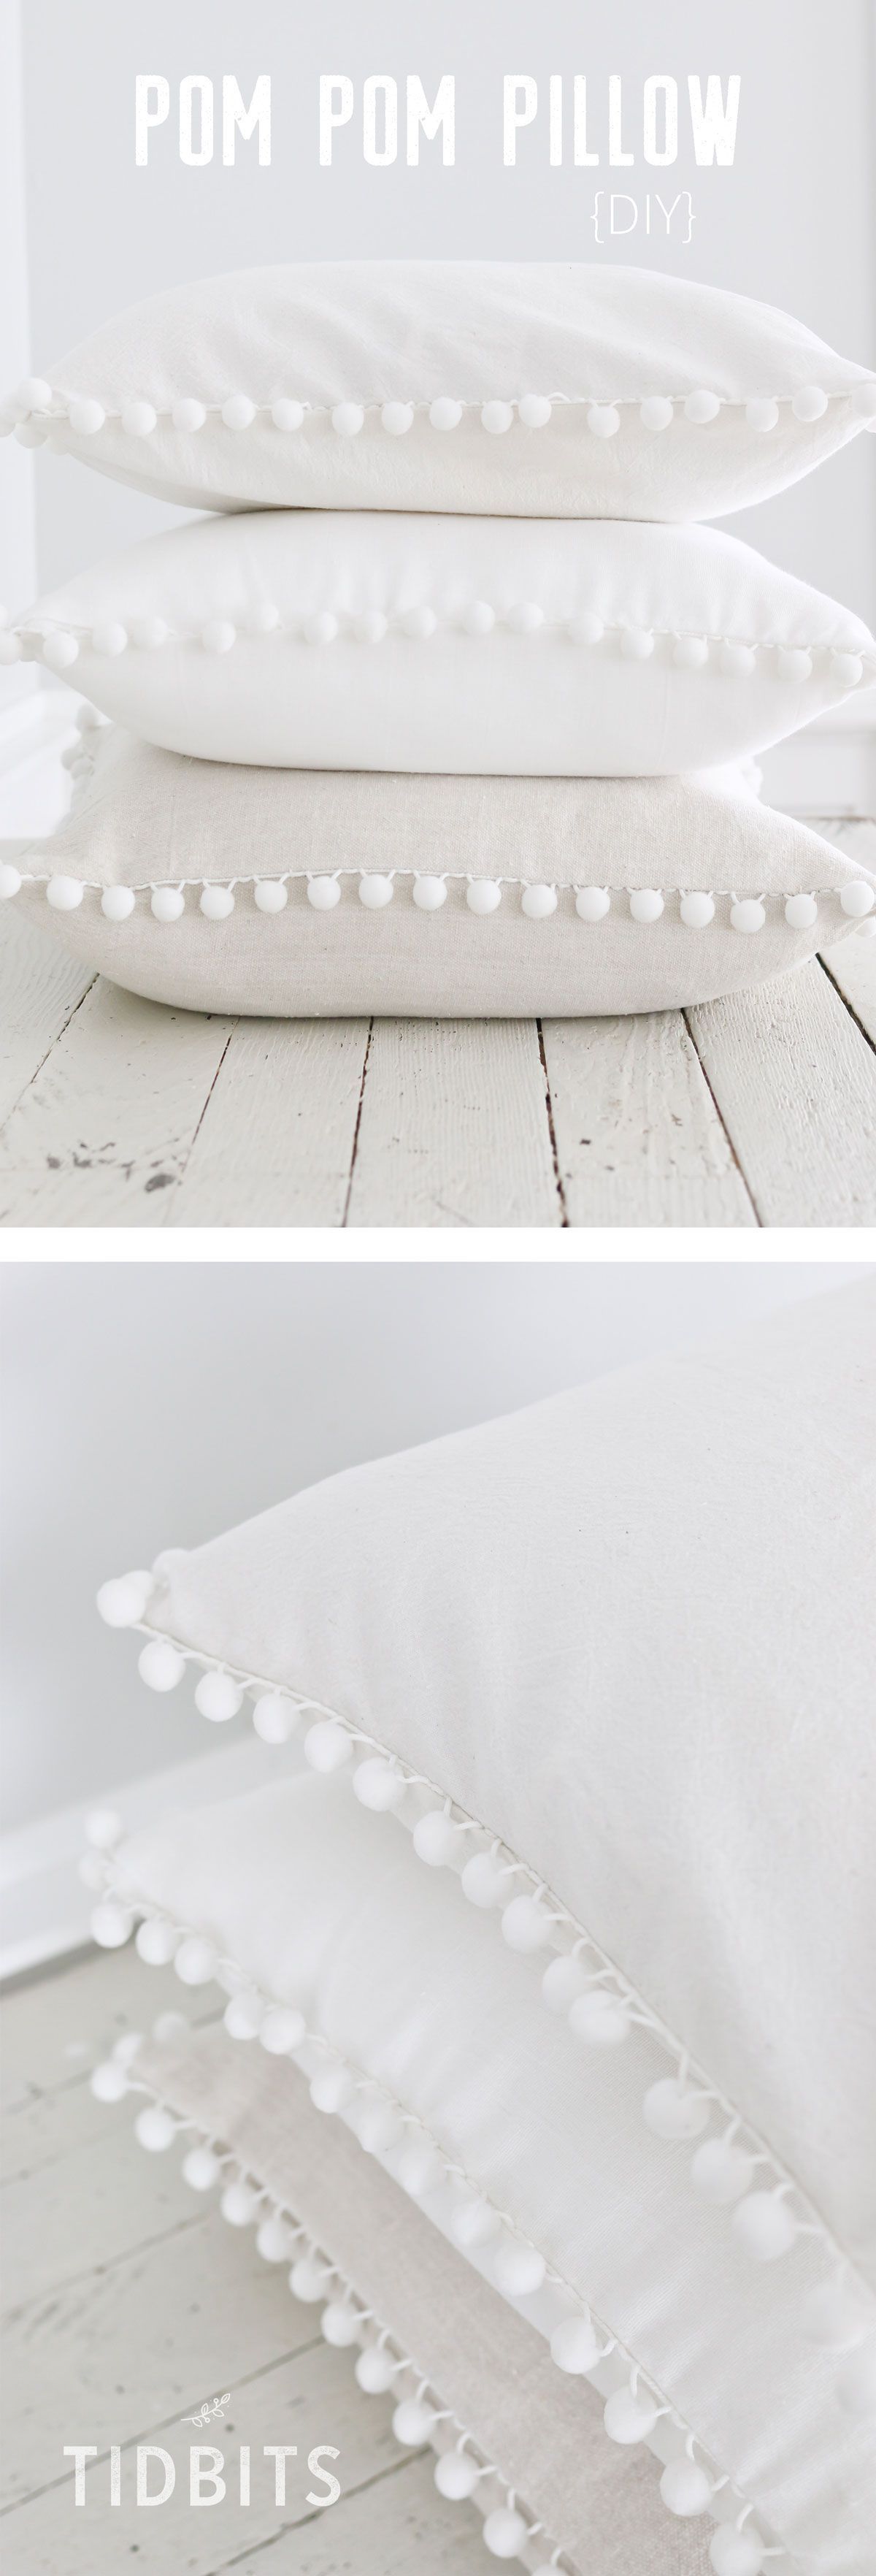 inspirational pillows -   18 diy Pillows for teens ideas